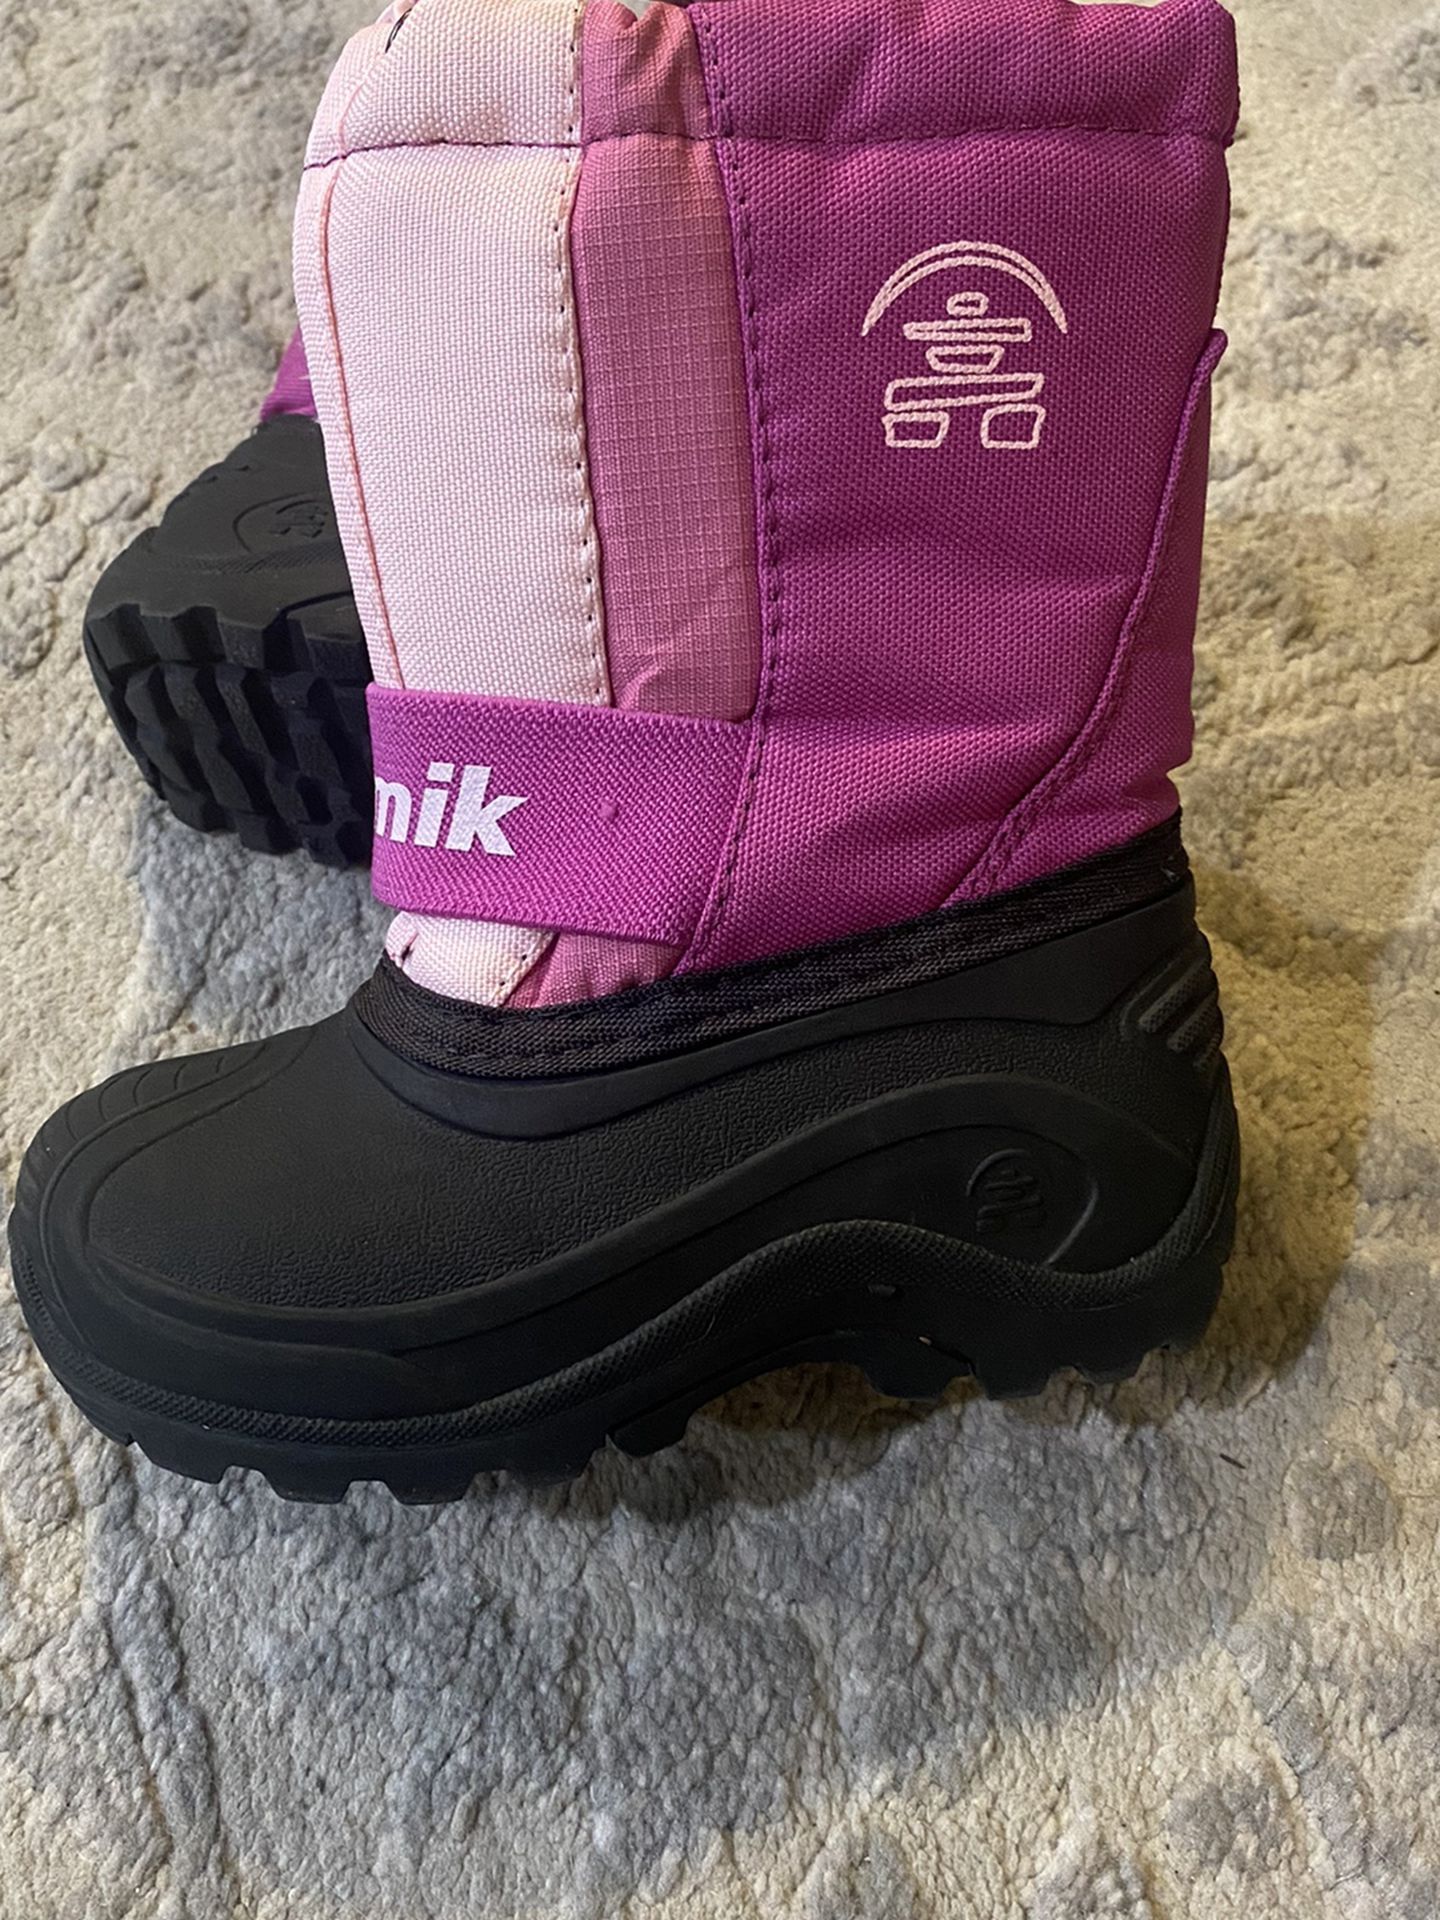 Kamik little girl toddler snow boots pink Sz 9